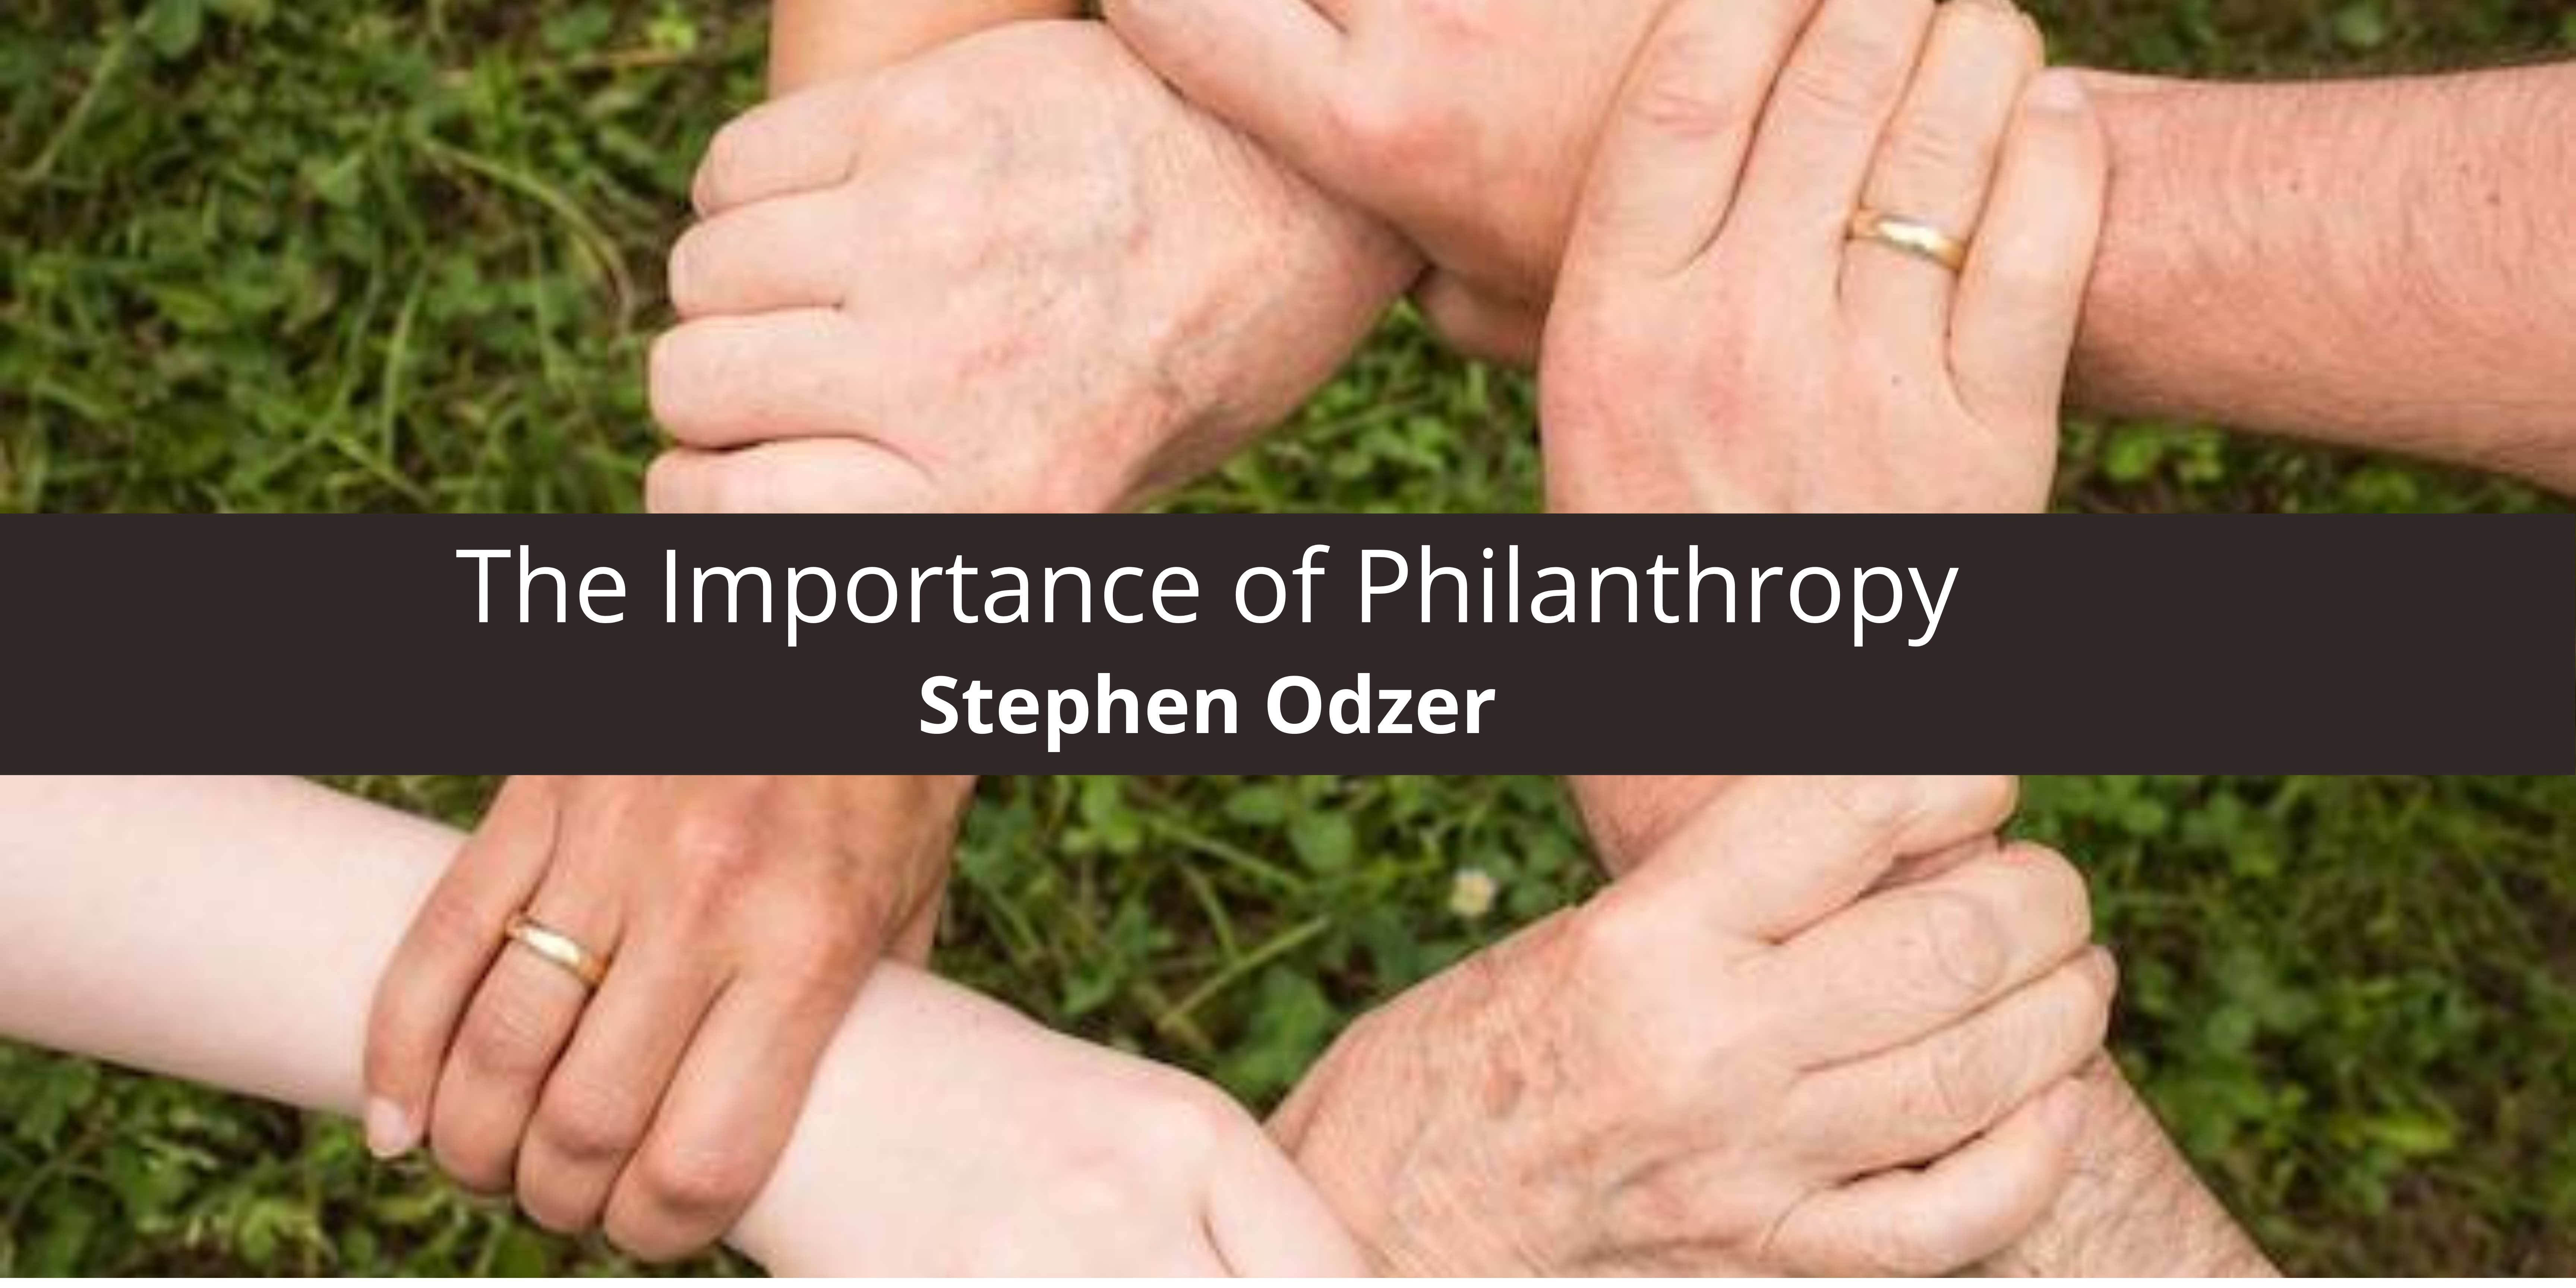 Stephen Odzer Talks About the Importance of Philanthropy